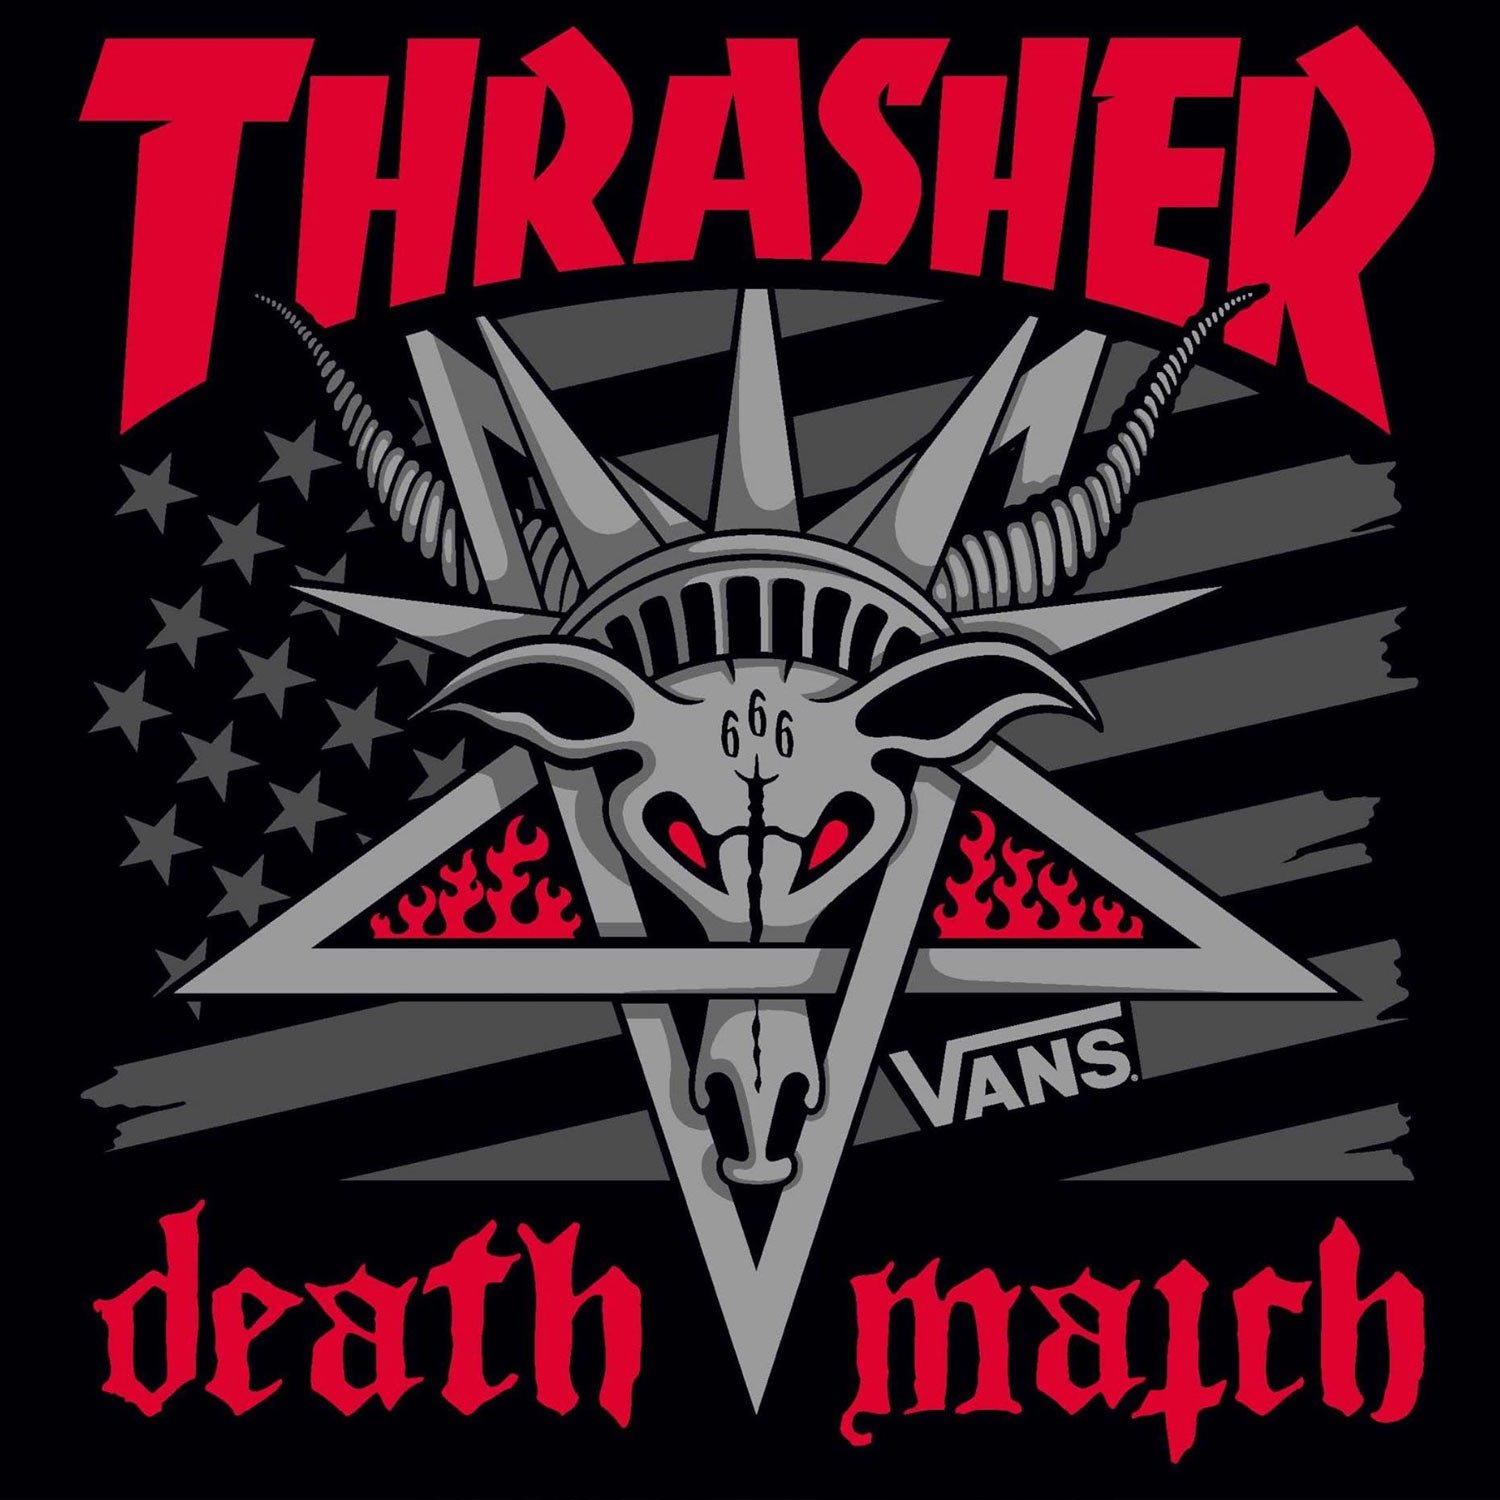 thrasher x vans death match nyc